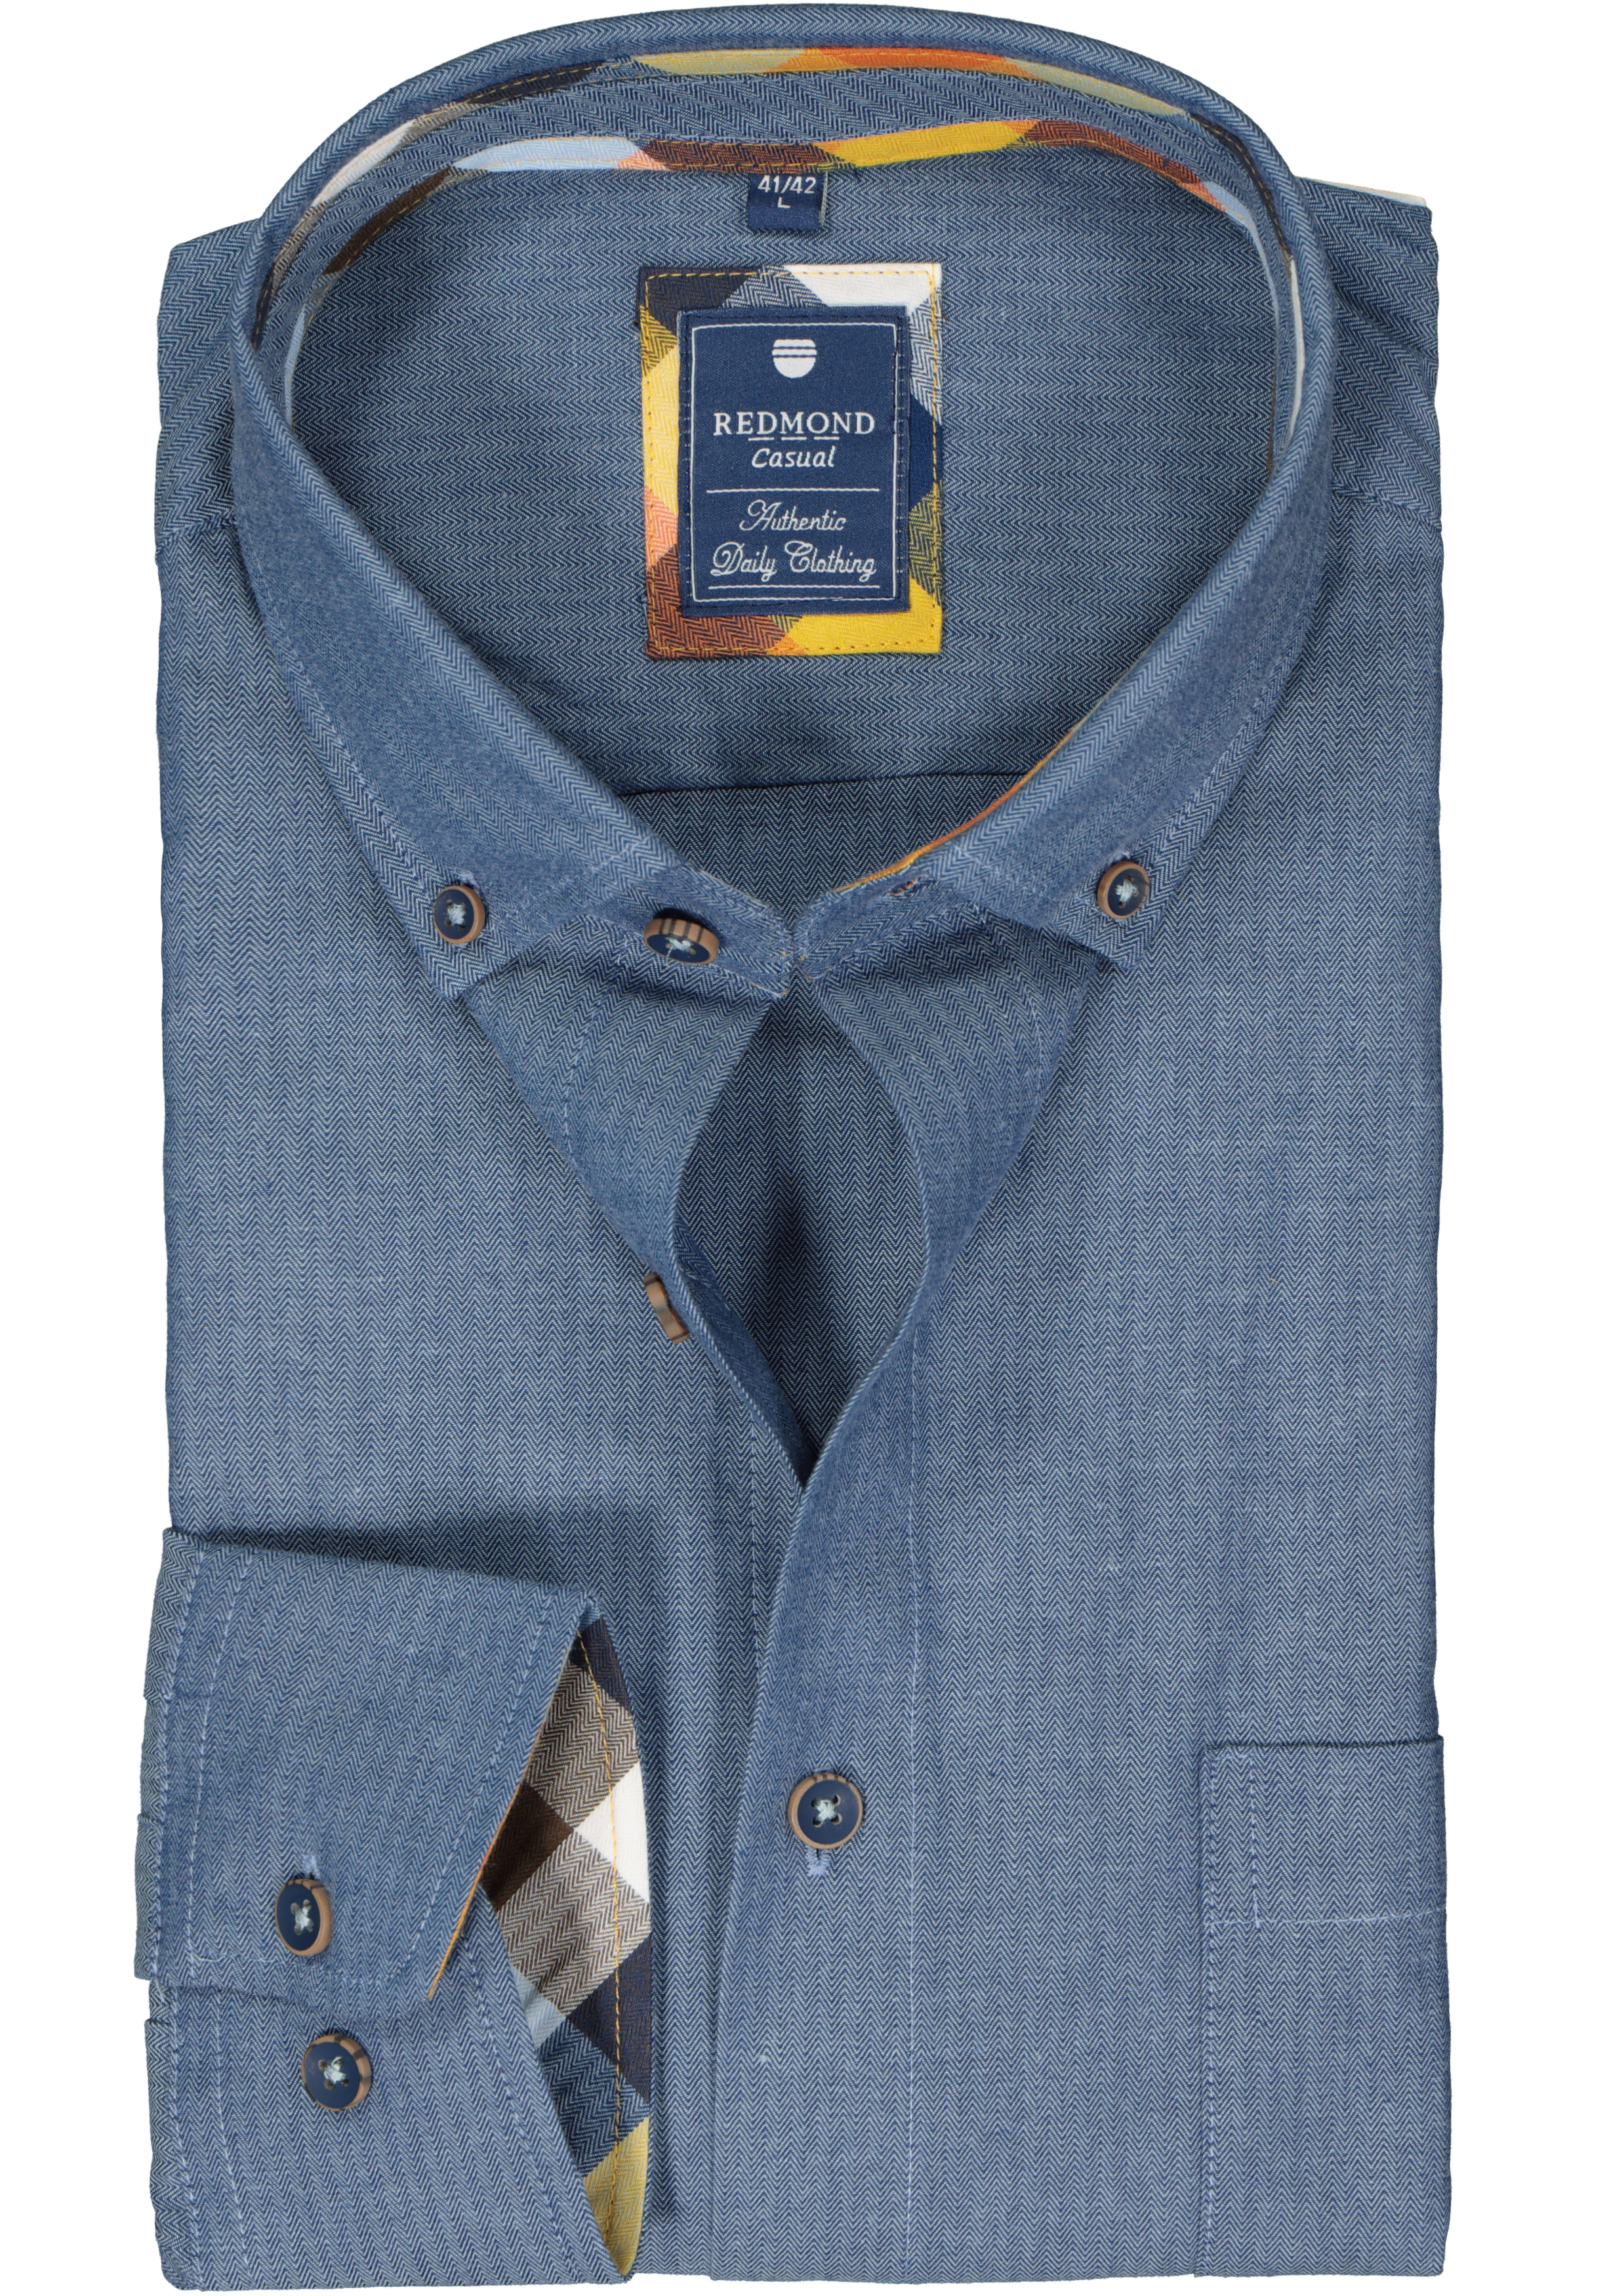 Redmond regular fit overhemd, herringbone, middenblauw